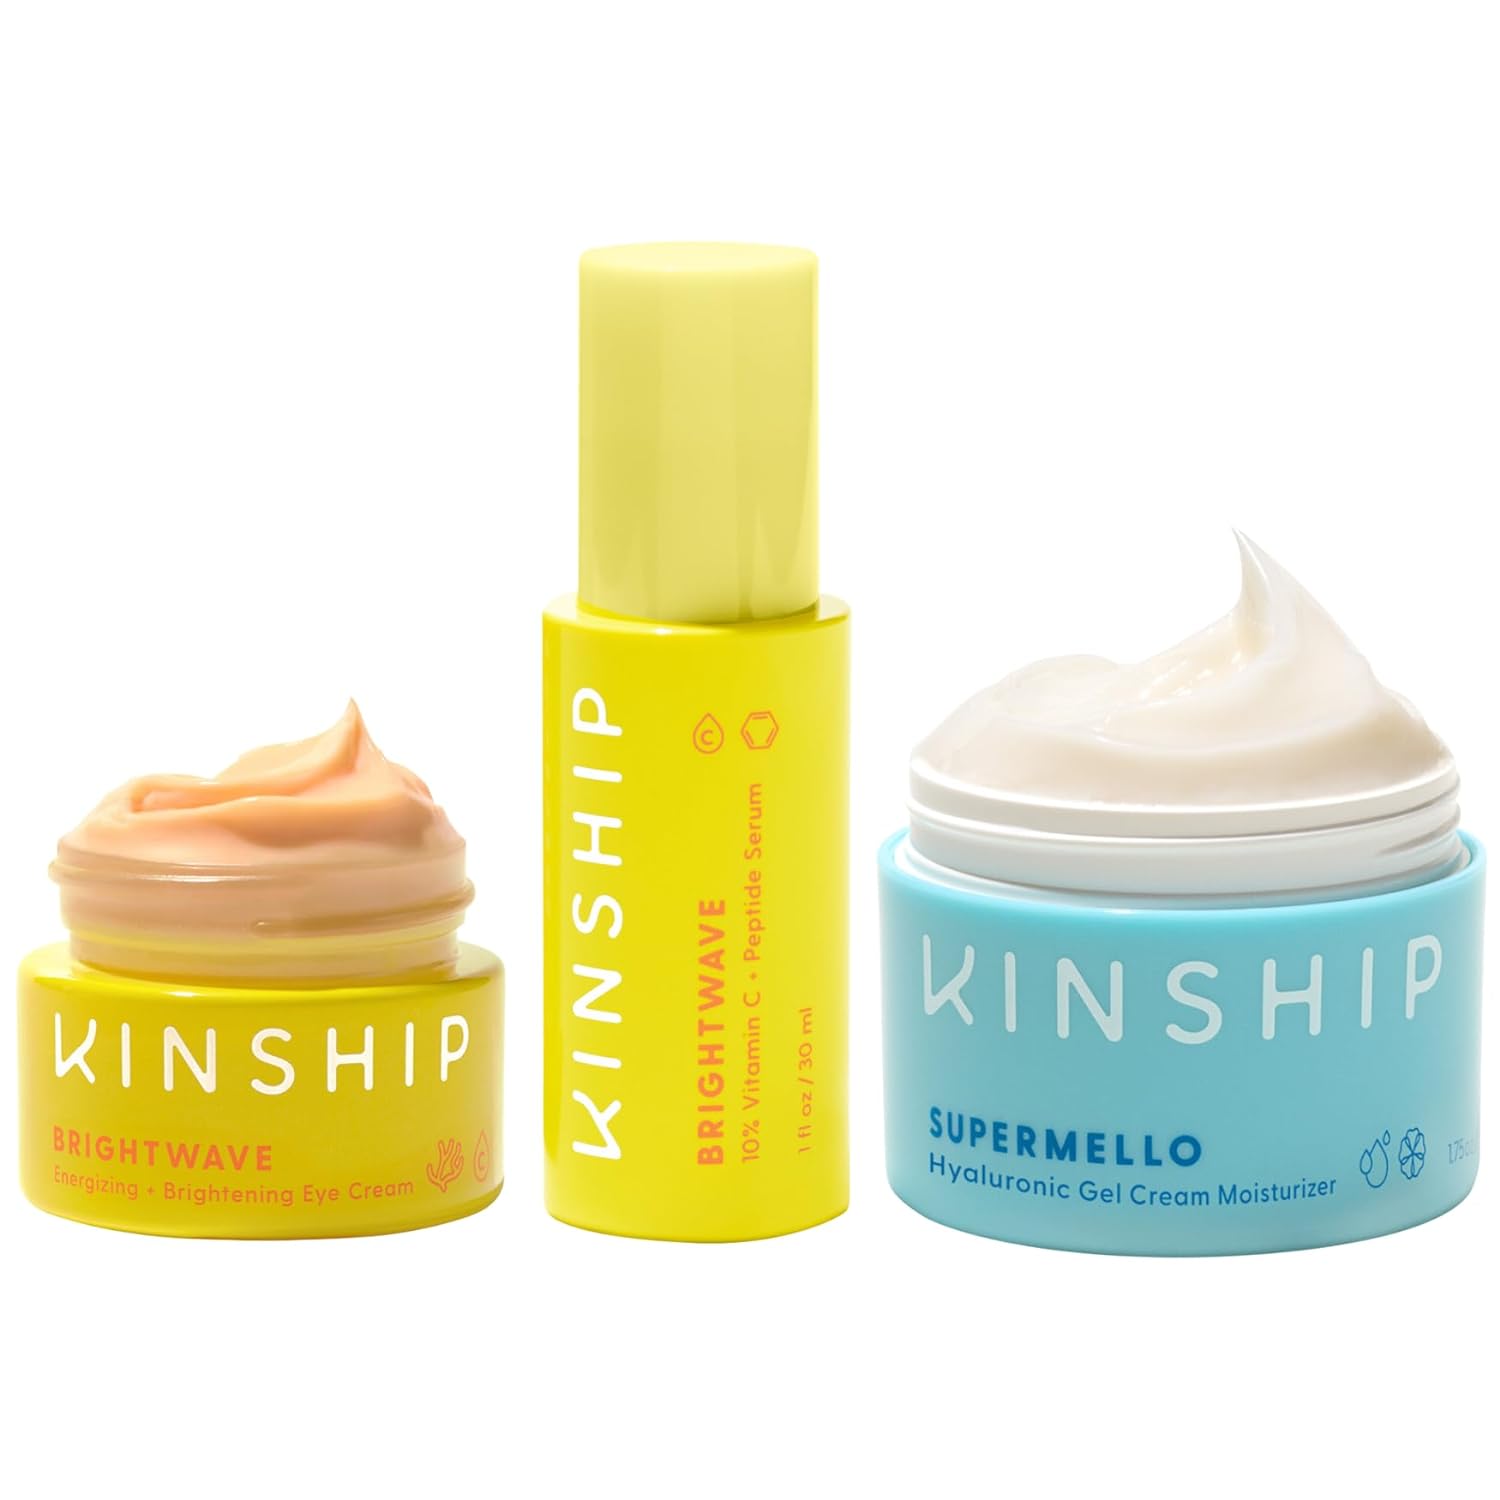 Kinship Moisture + Brighten Bundle | Supermello + Brightwave Eye Cream + Brightwave Face Serum | Gel Cream Moisturizer + Vitamin C Anti-Aging Skincare | Reduce Fine Lines & Wrinkles | All Skin Types